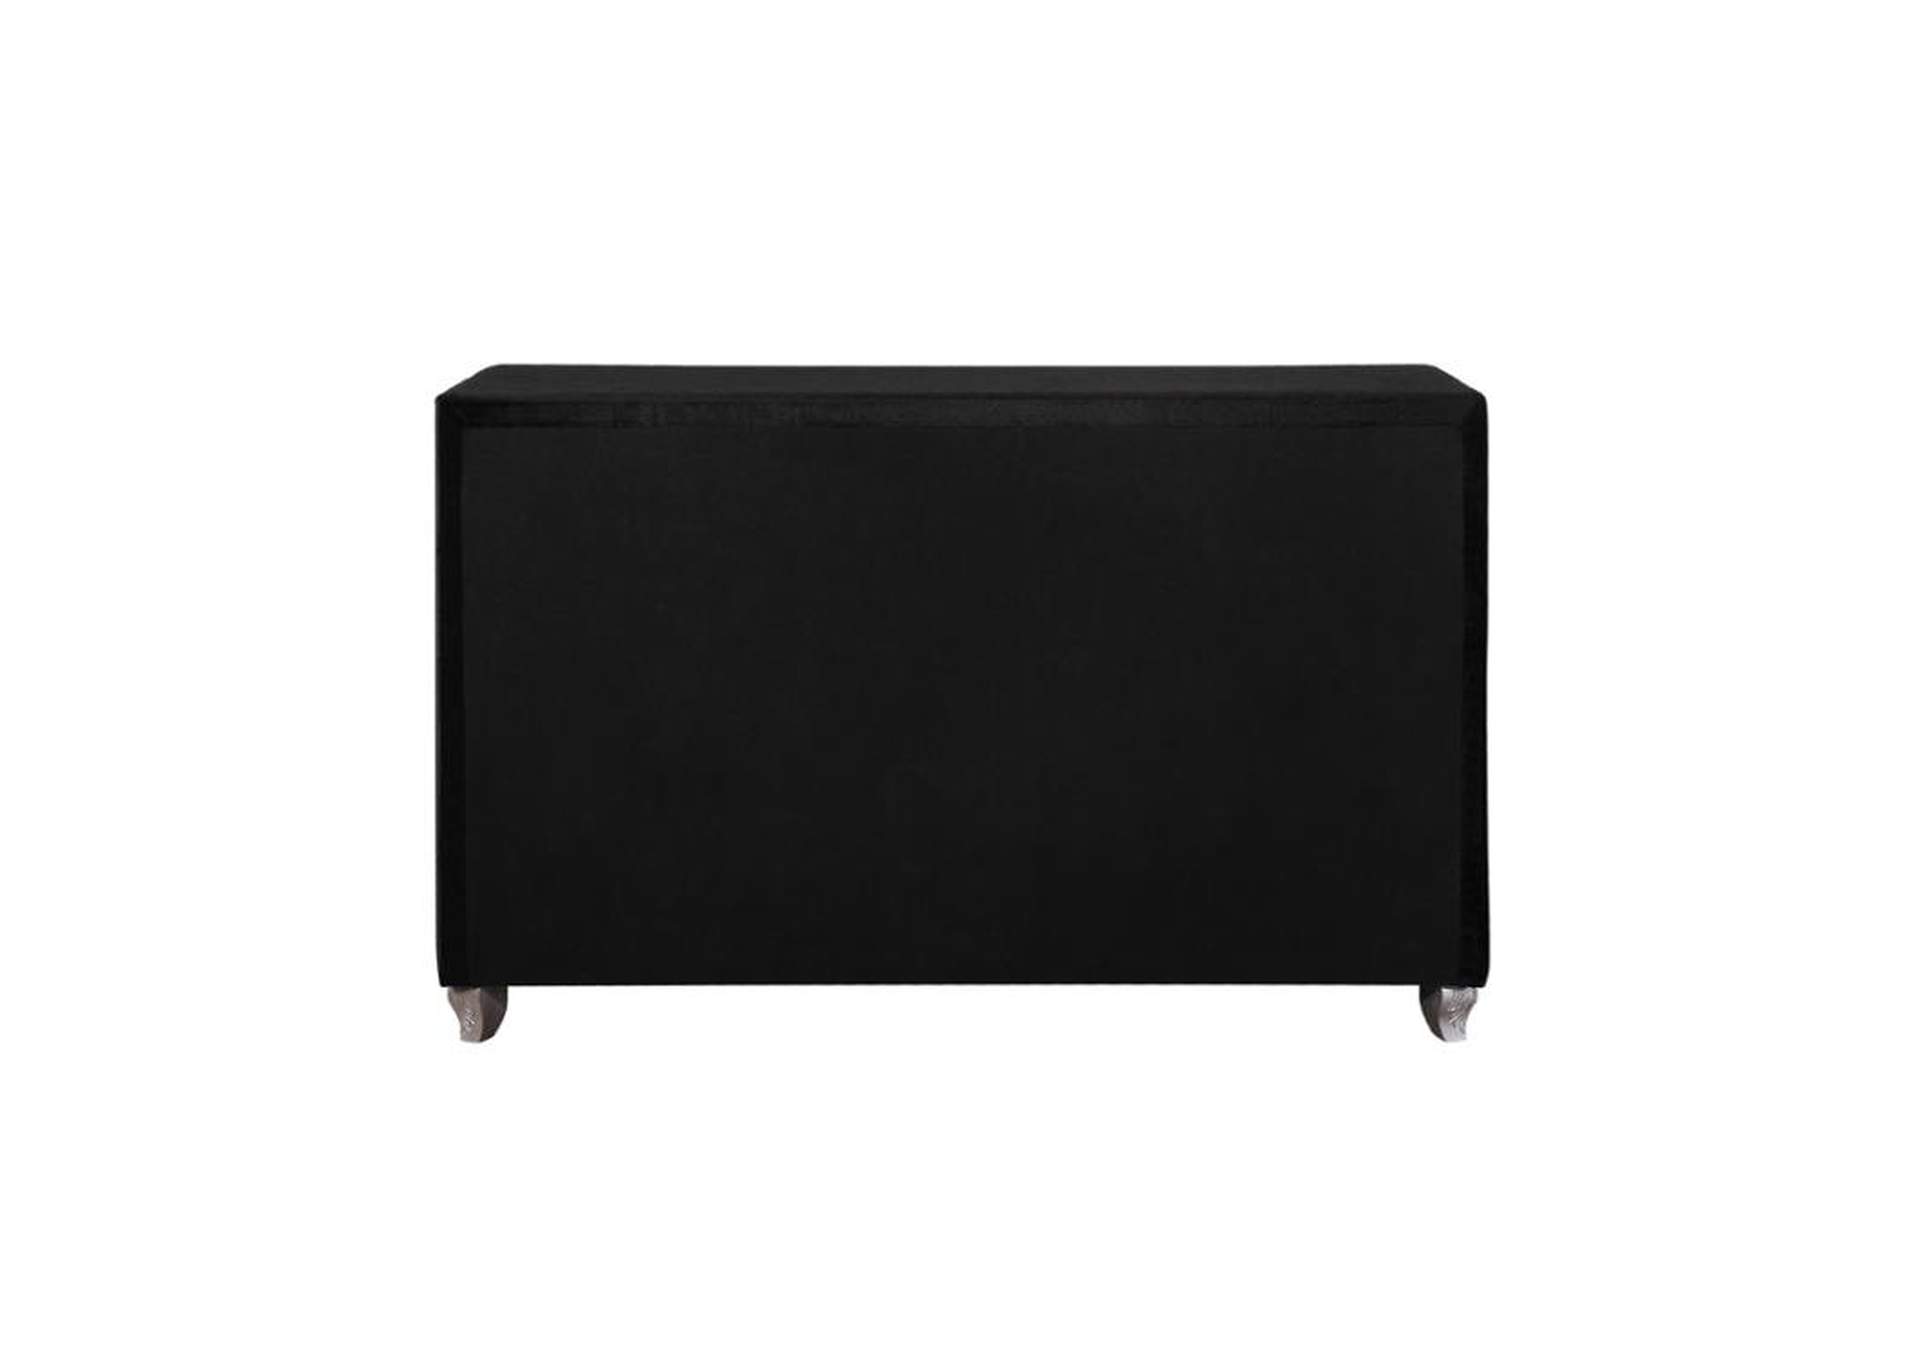 Deanna 7-drawer Rectangular Dresser Black,Coaster Furniture